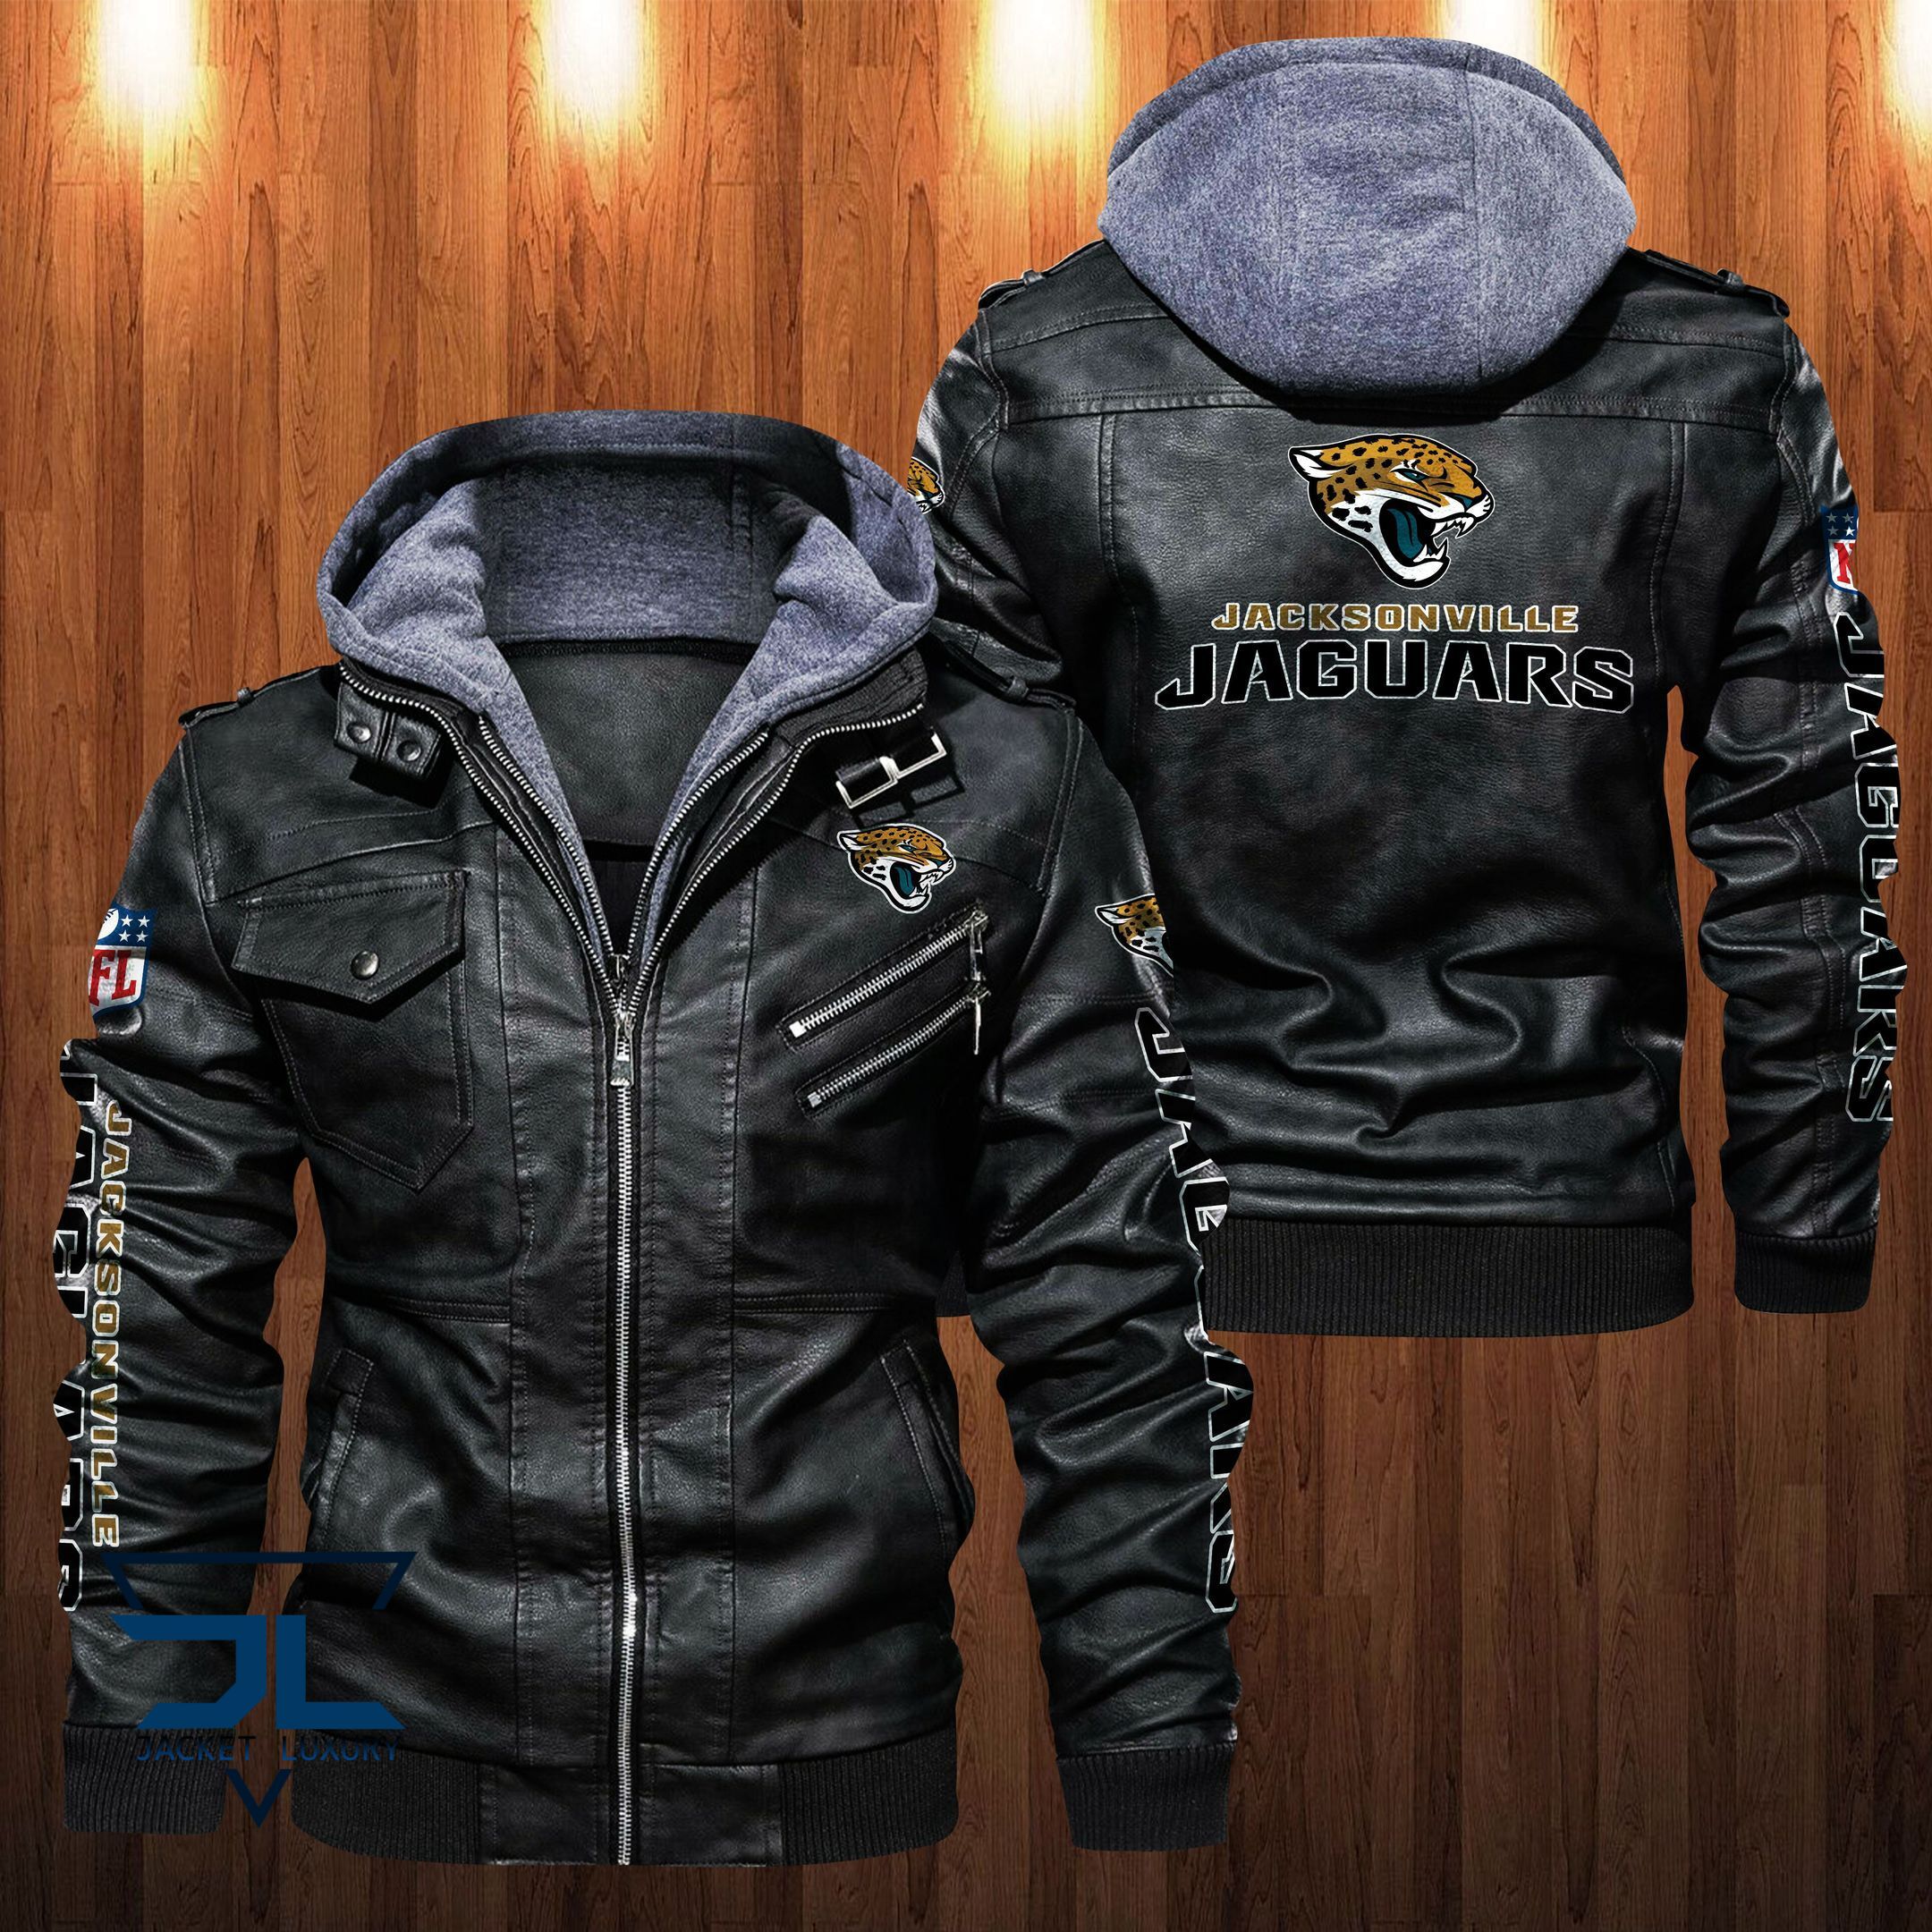 What Leather jacket Sells Best on Techcomshop? 66